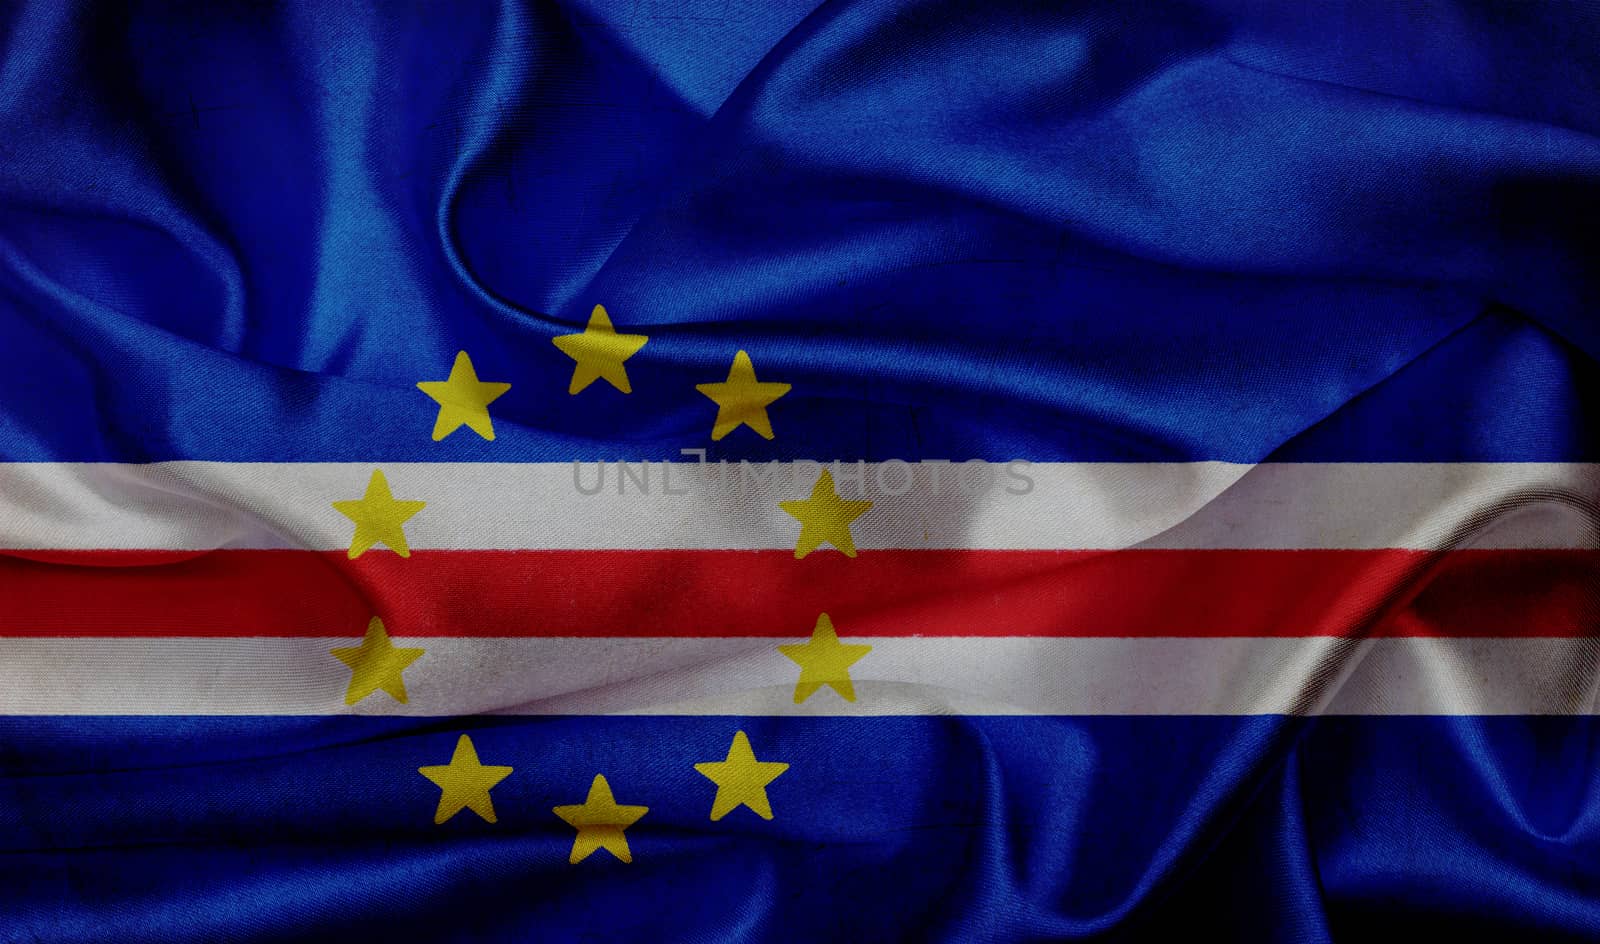 Cape Verde grunge waving flag by taesmileland